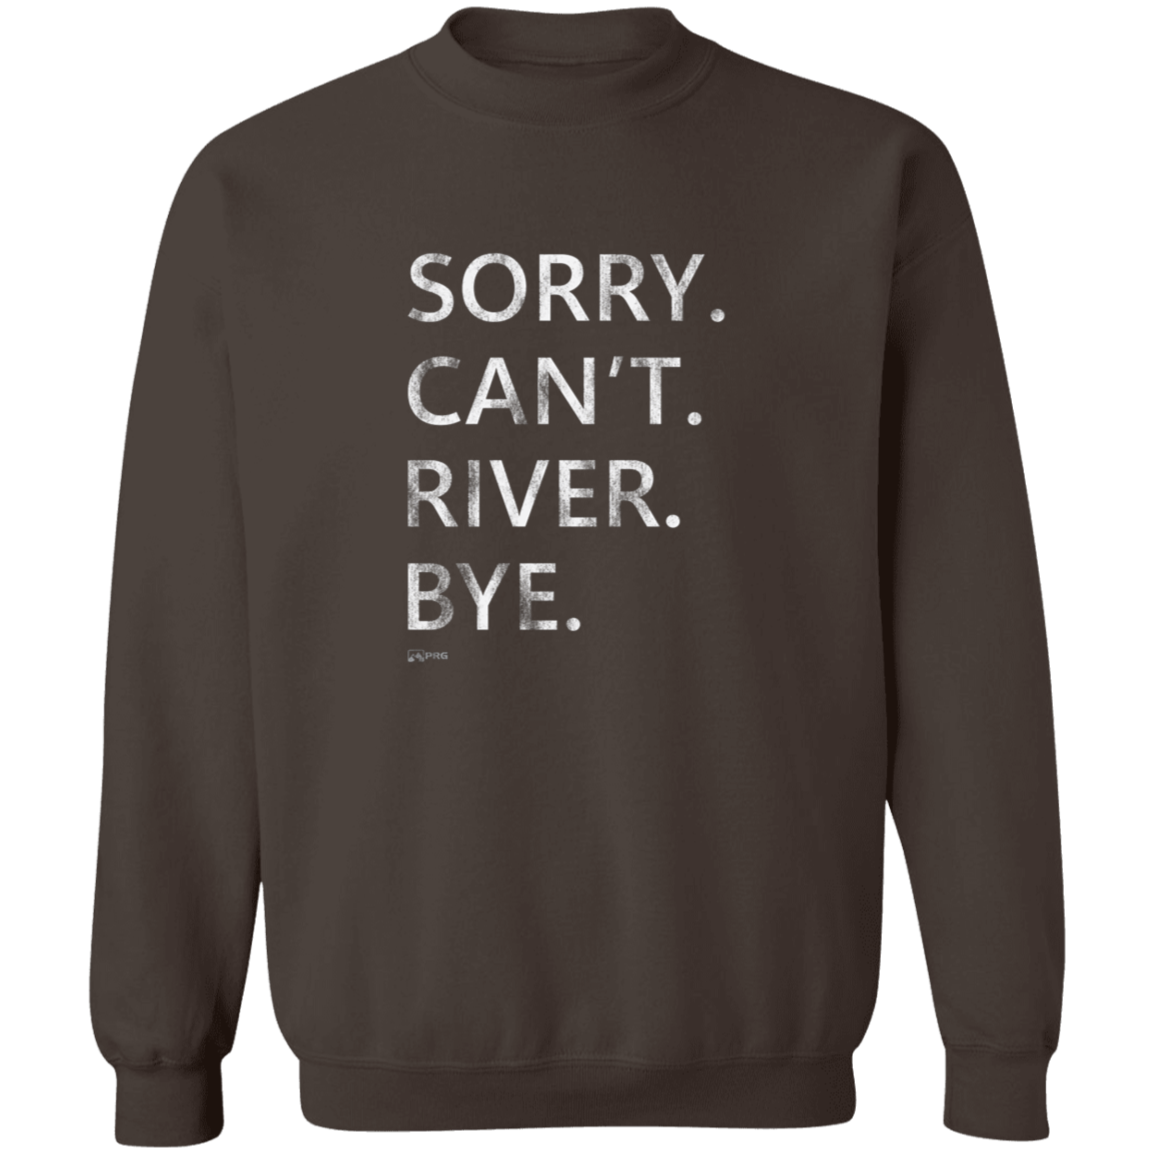 Sorry. Can't. River. Bye. - Sweatshirt